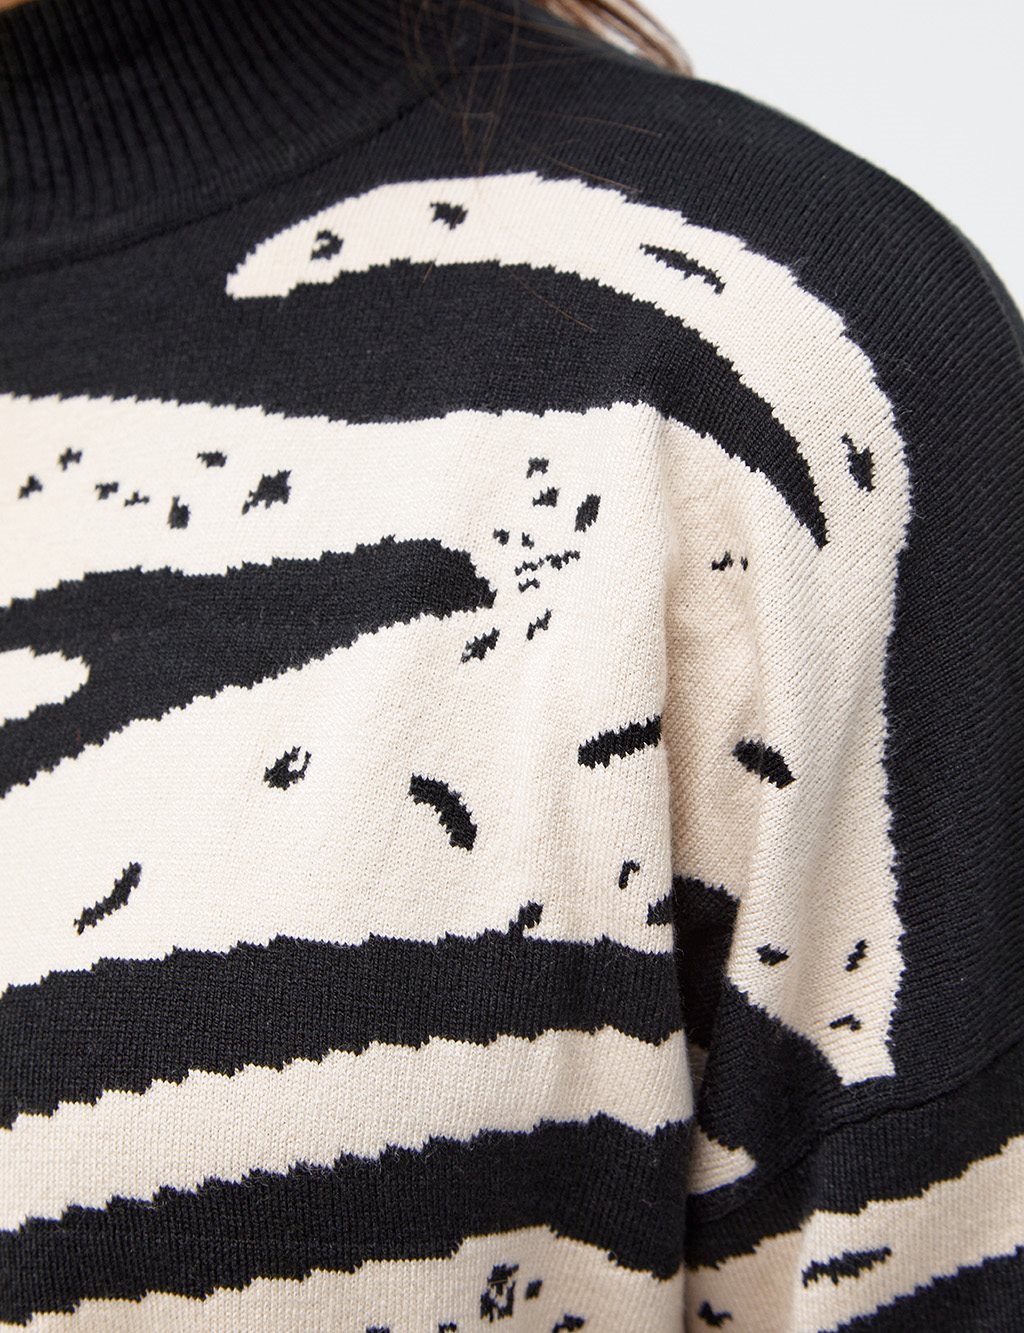 Abstract Pattern Knitwear Tunic Black